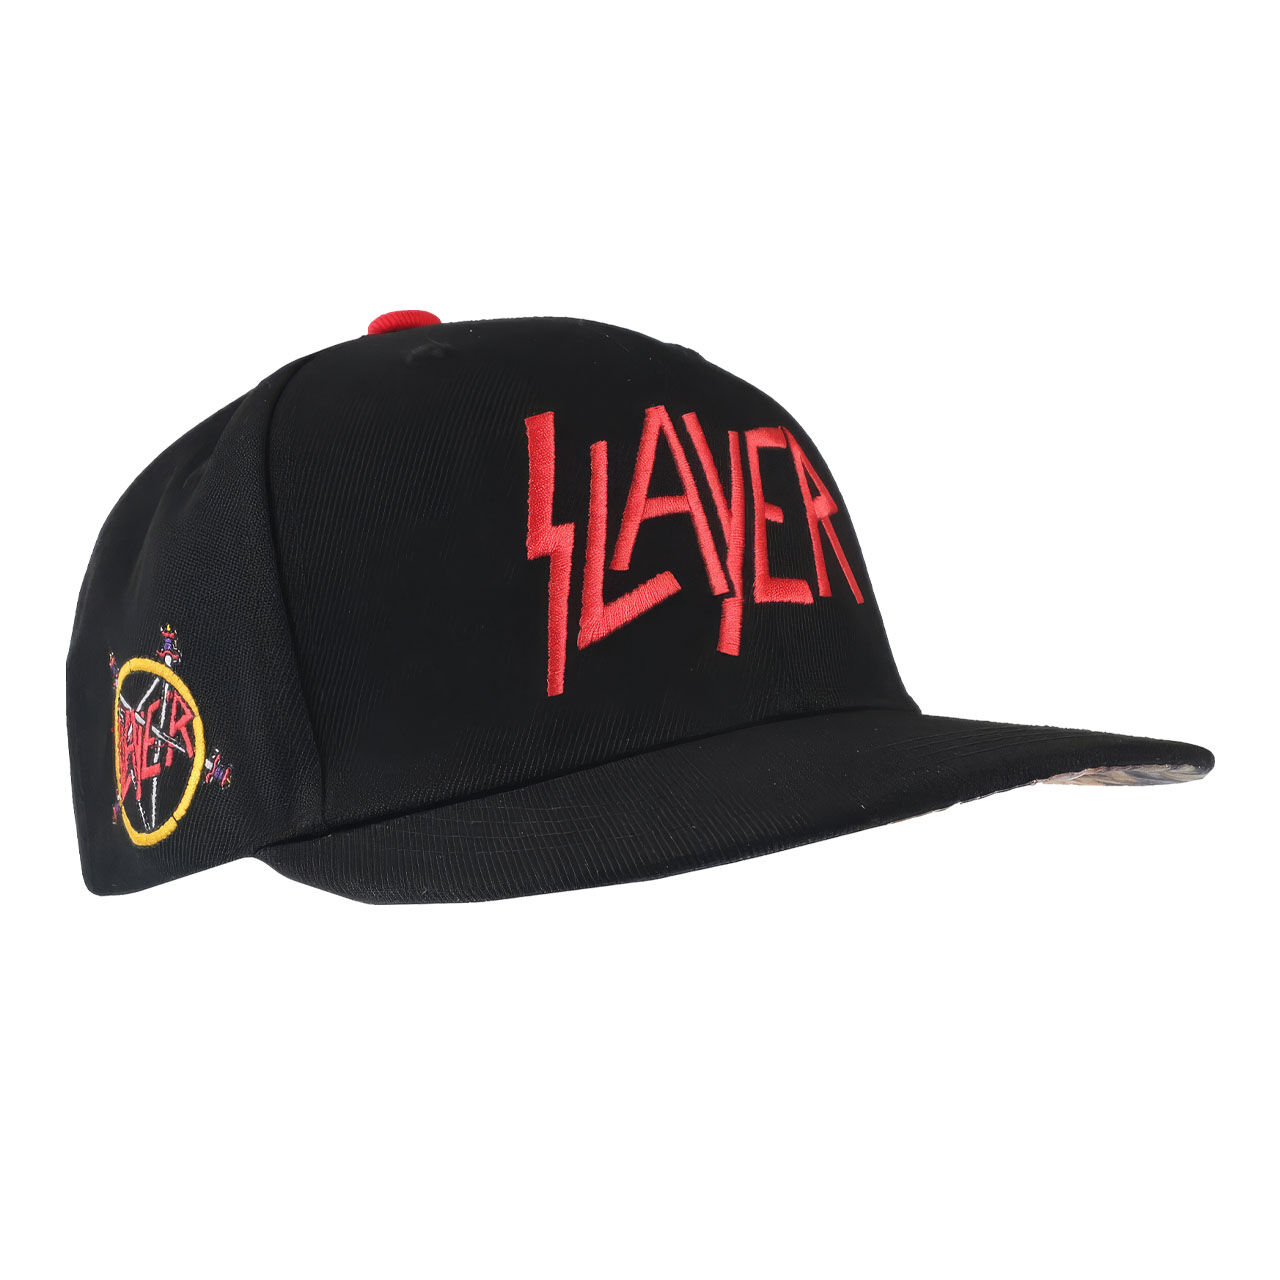 SLAYER Logo Hat/Cap